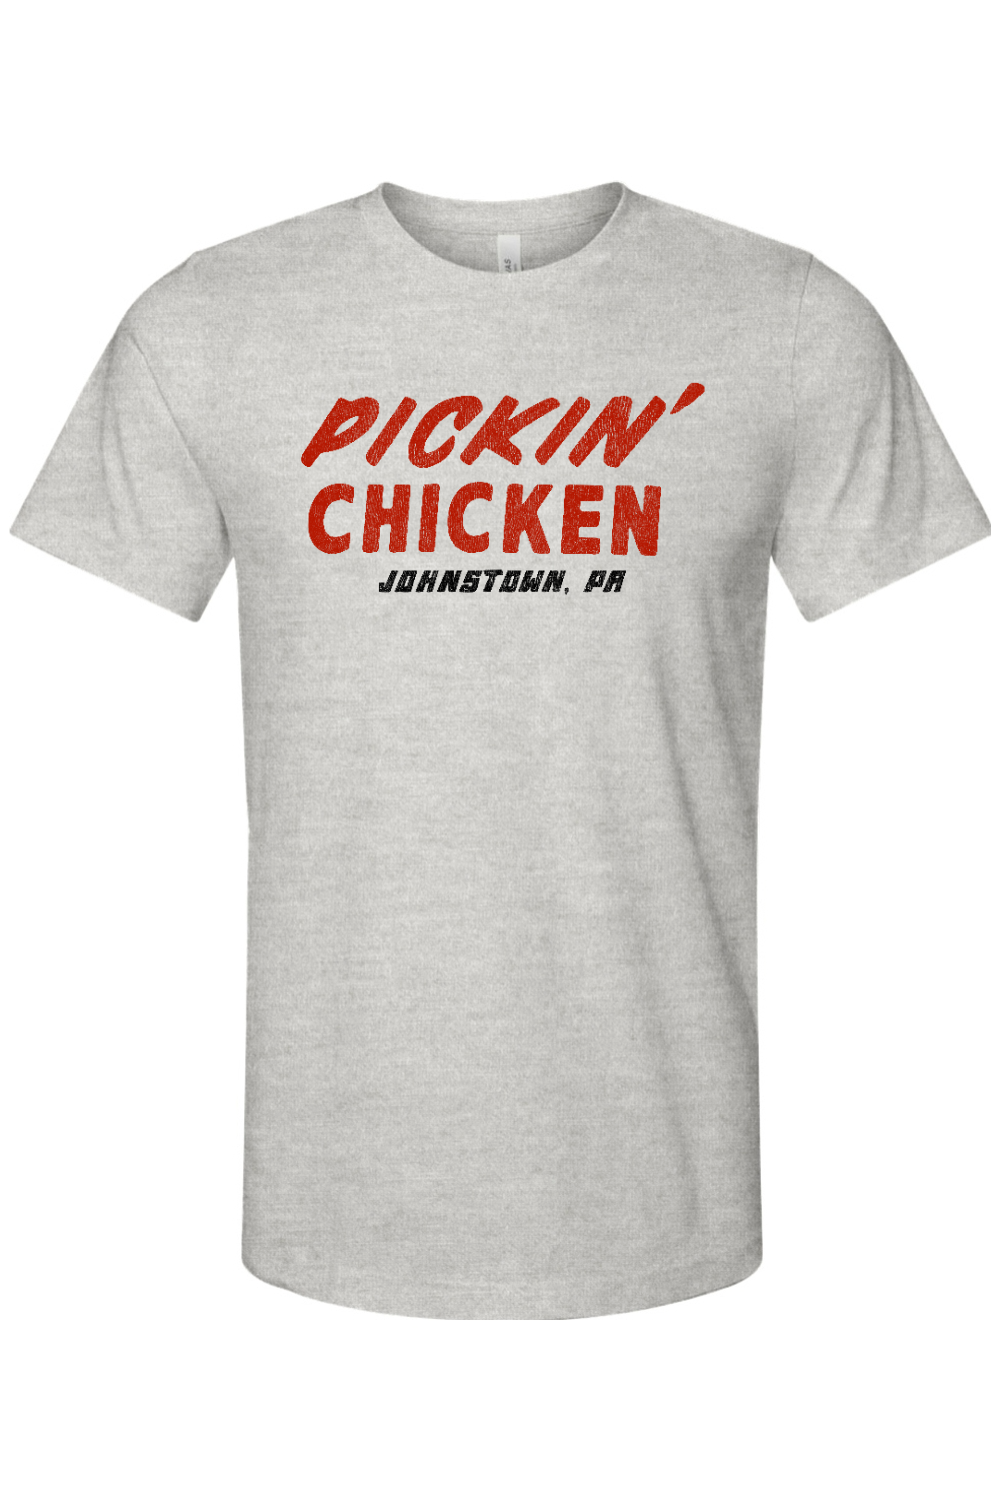 Pickin' Chicken - Johnstown, PA - Yinzylvania